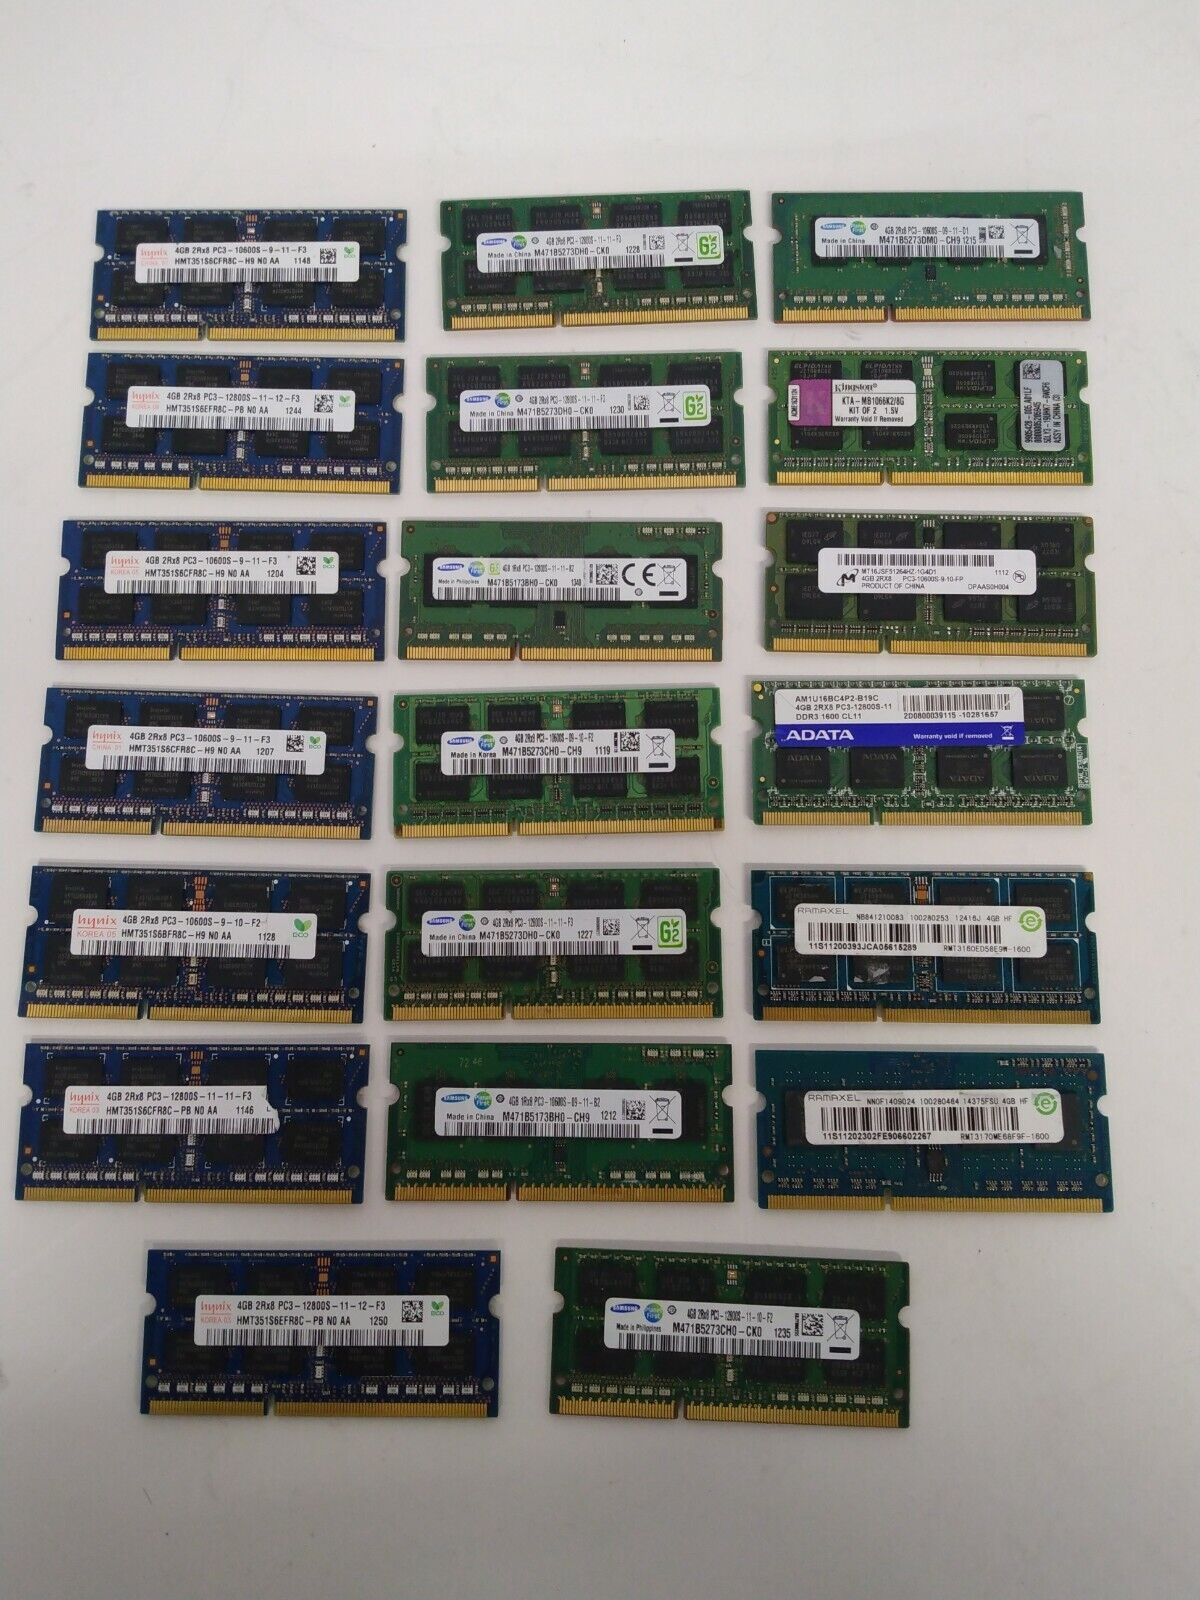 Lot of 20PCs MIX Brands 4GB 1Rx8 &2Rx8 PC3 SODIMM Laptop Memory Ram 80GB(20x4GB)